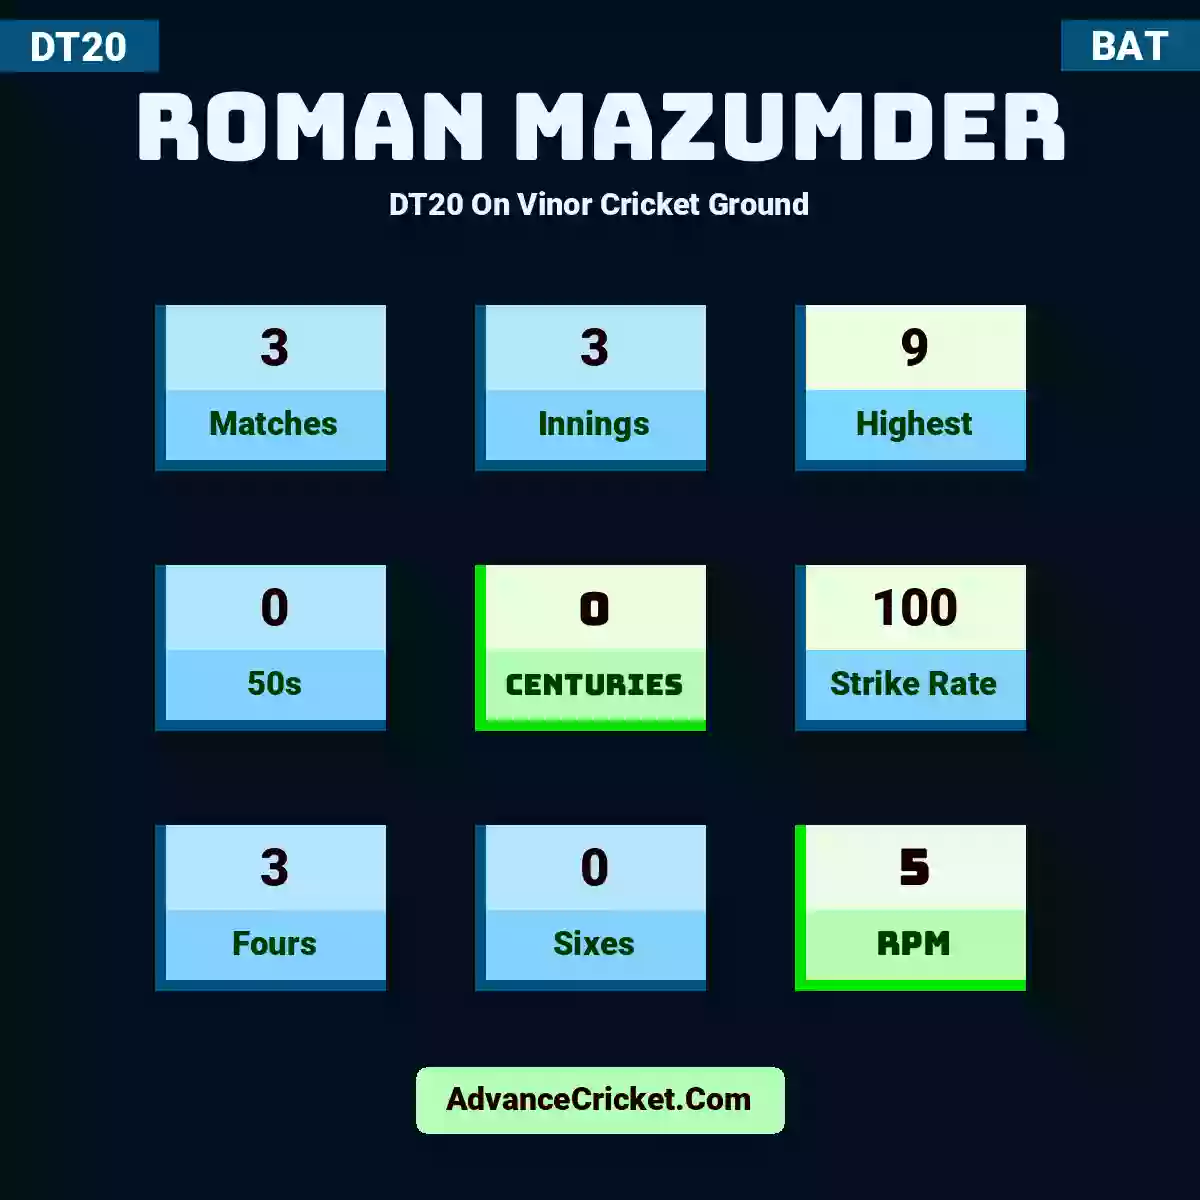 Roman Mazumder DT20  On Vinor Cricket Ground, Roman Mazumder played 3 matches, scored 9 runs as highest, 0 half-centuries, and 0 centuries, with a strike rate of 100. R.Mazumder hit 3 fours and 0 sixes, with an RPM of 5.